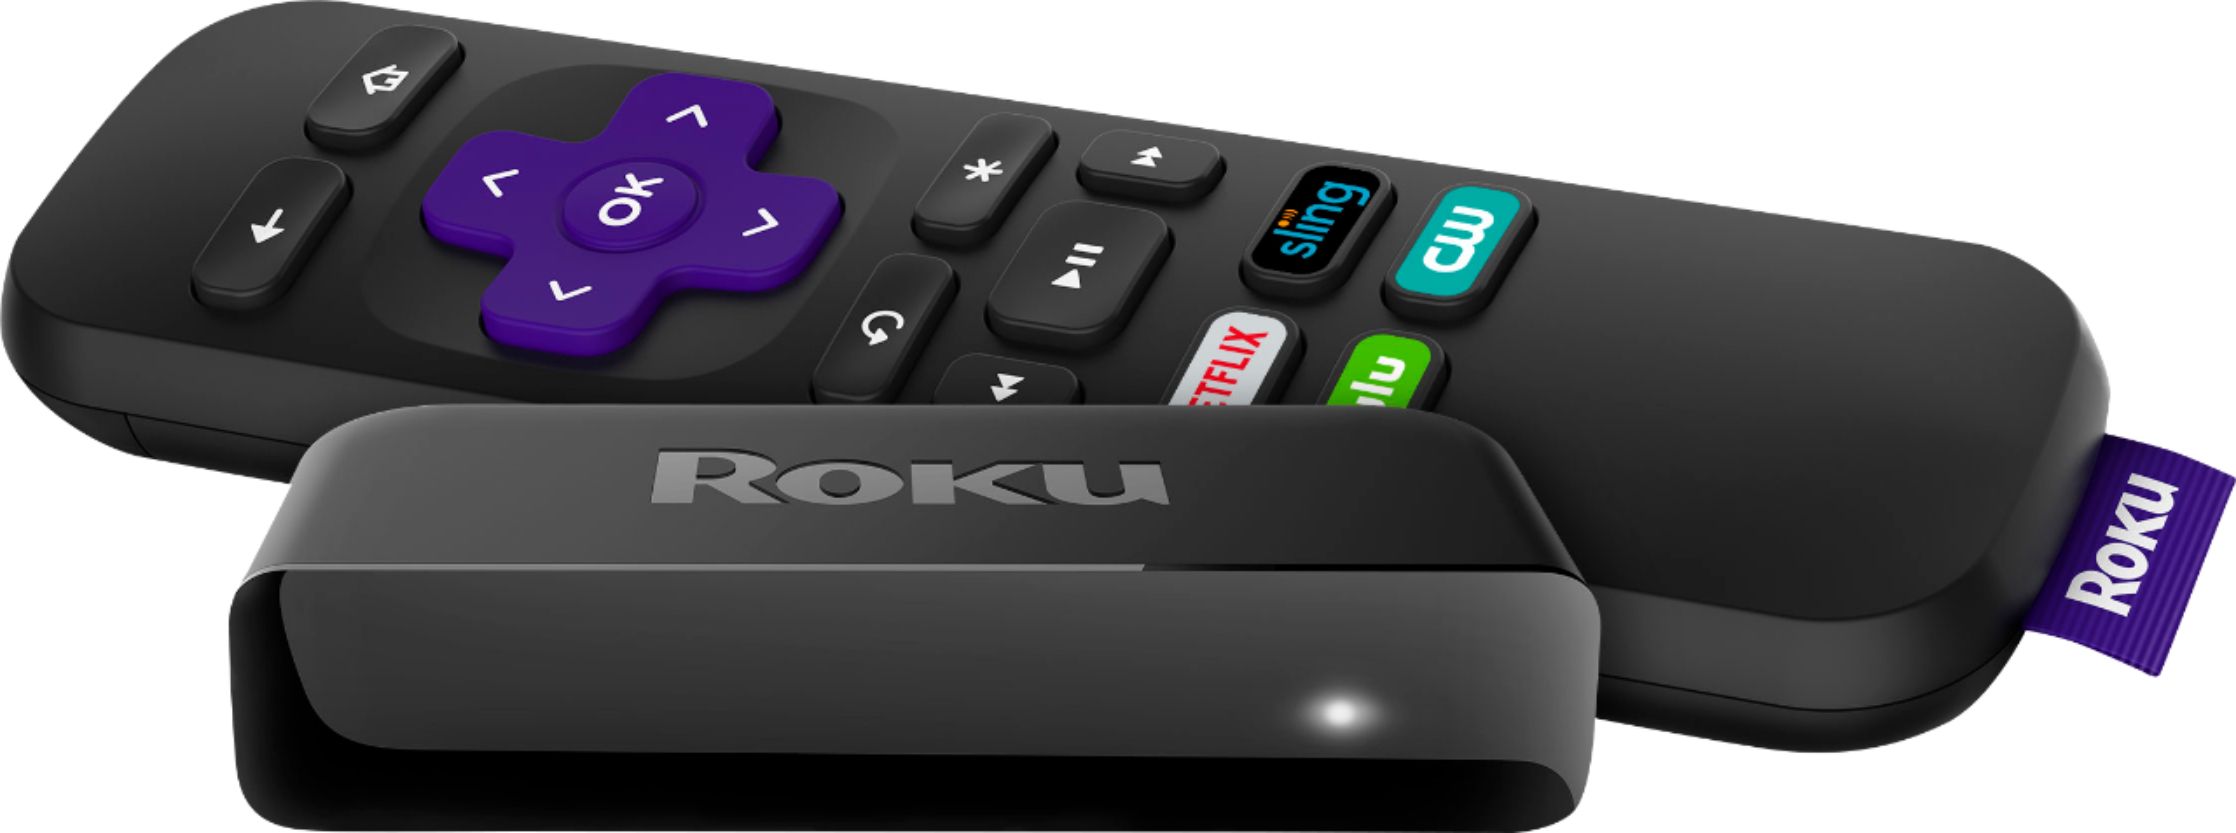 3900R Roku Express 1080p Full HD Media Streaming Player 2017 Model